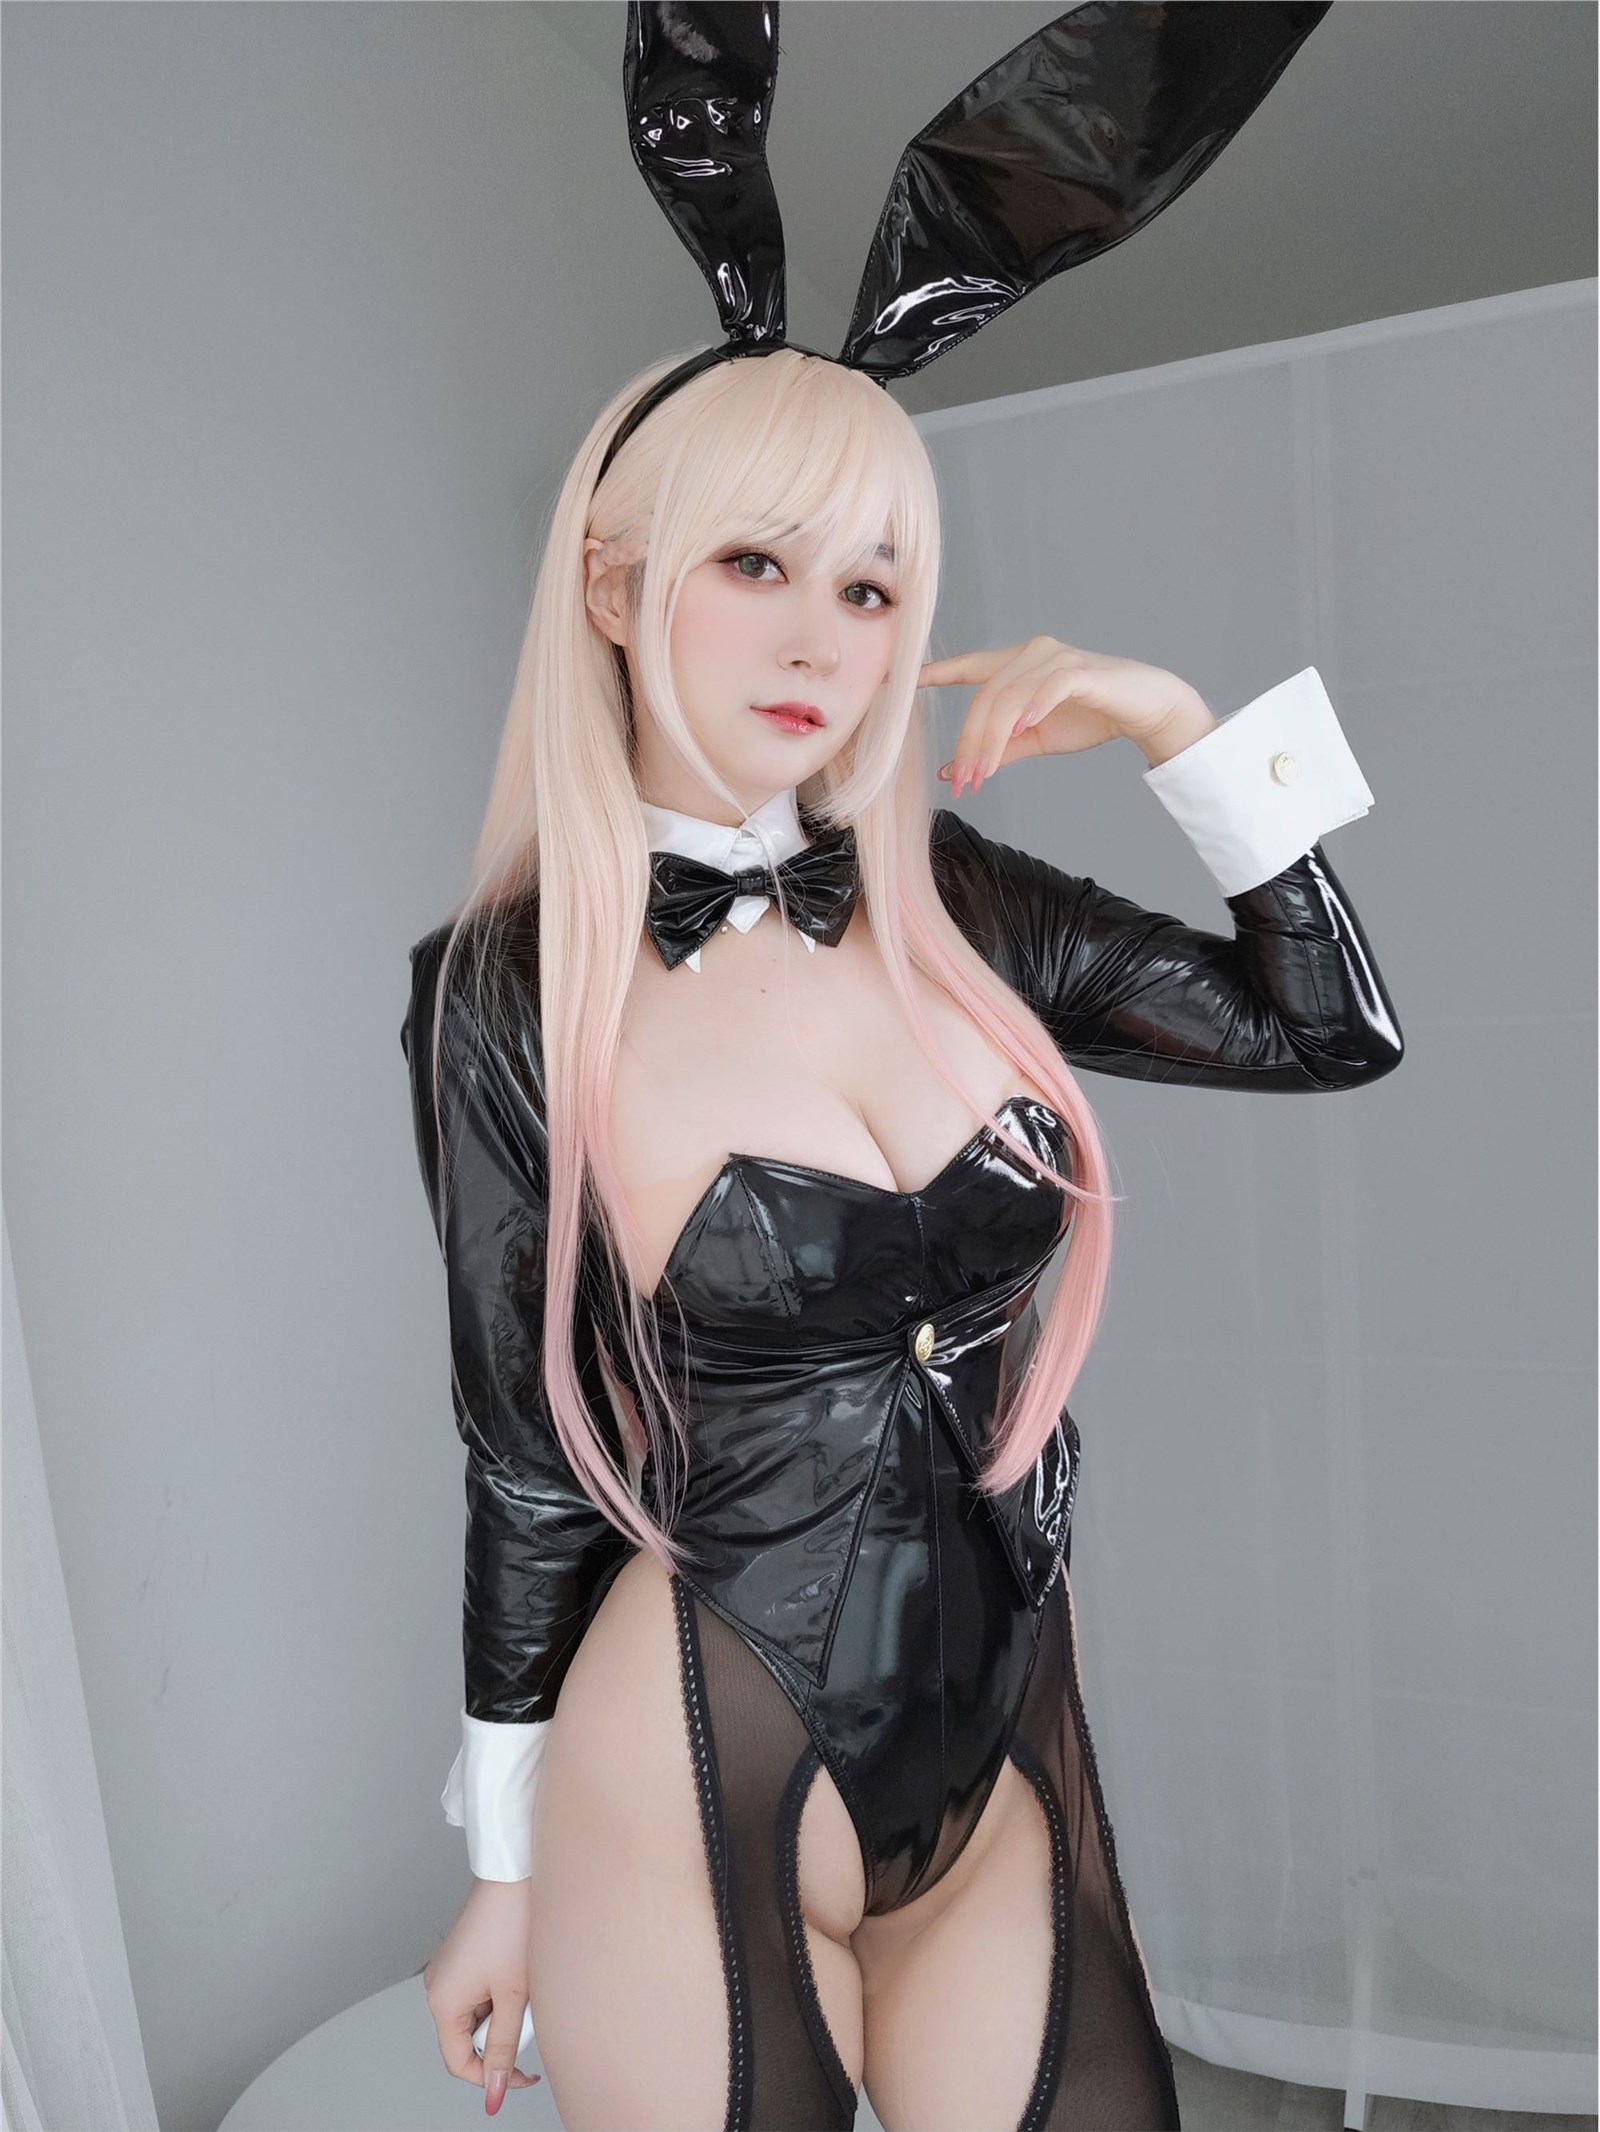 Bunny Girl - livedoor blog(5)